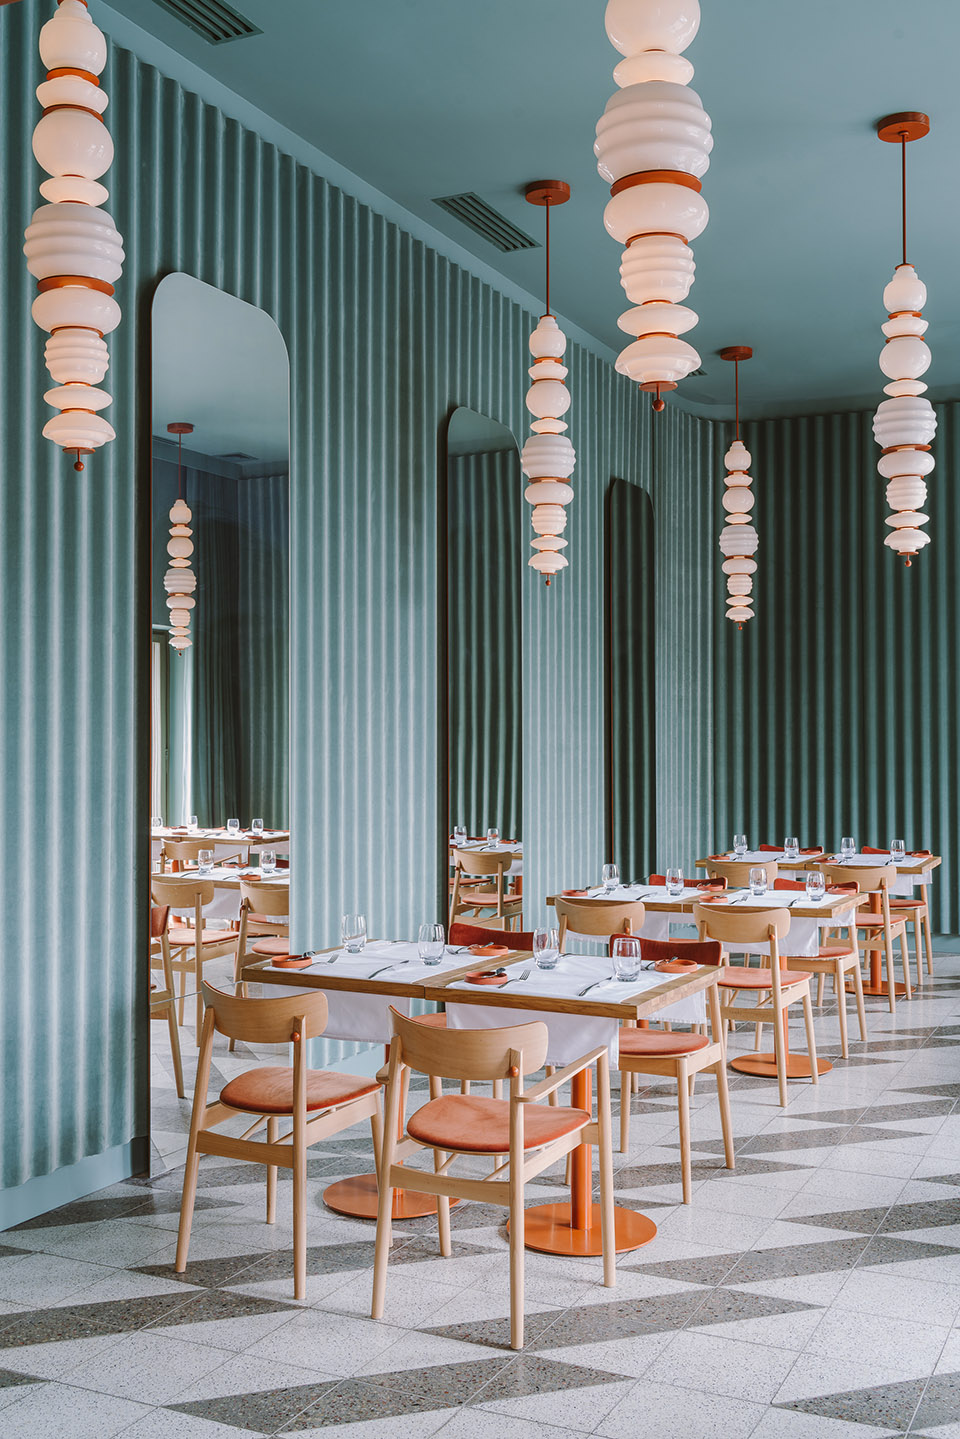 OPASLY TOM餐厅，华沙/丰富的色彩、饰面和纹理空间下的用餐体验-72